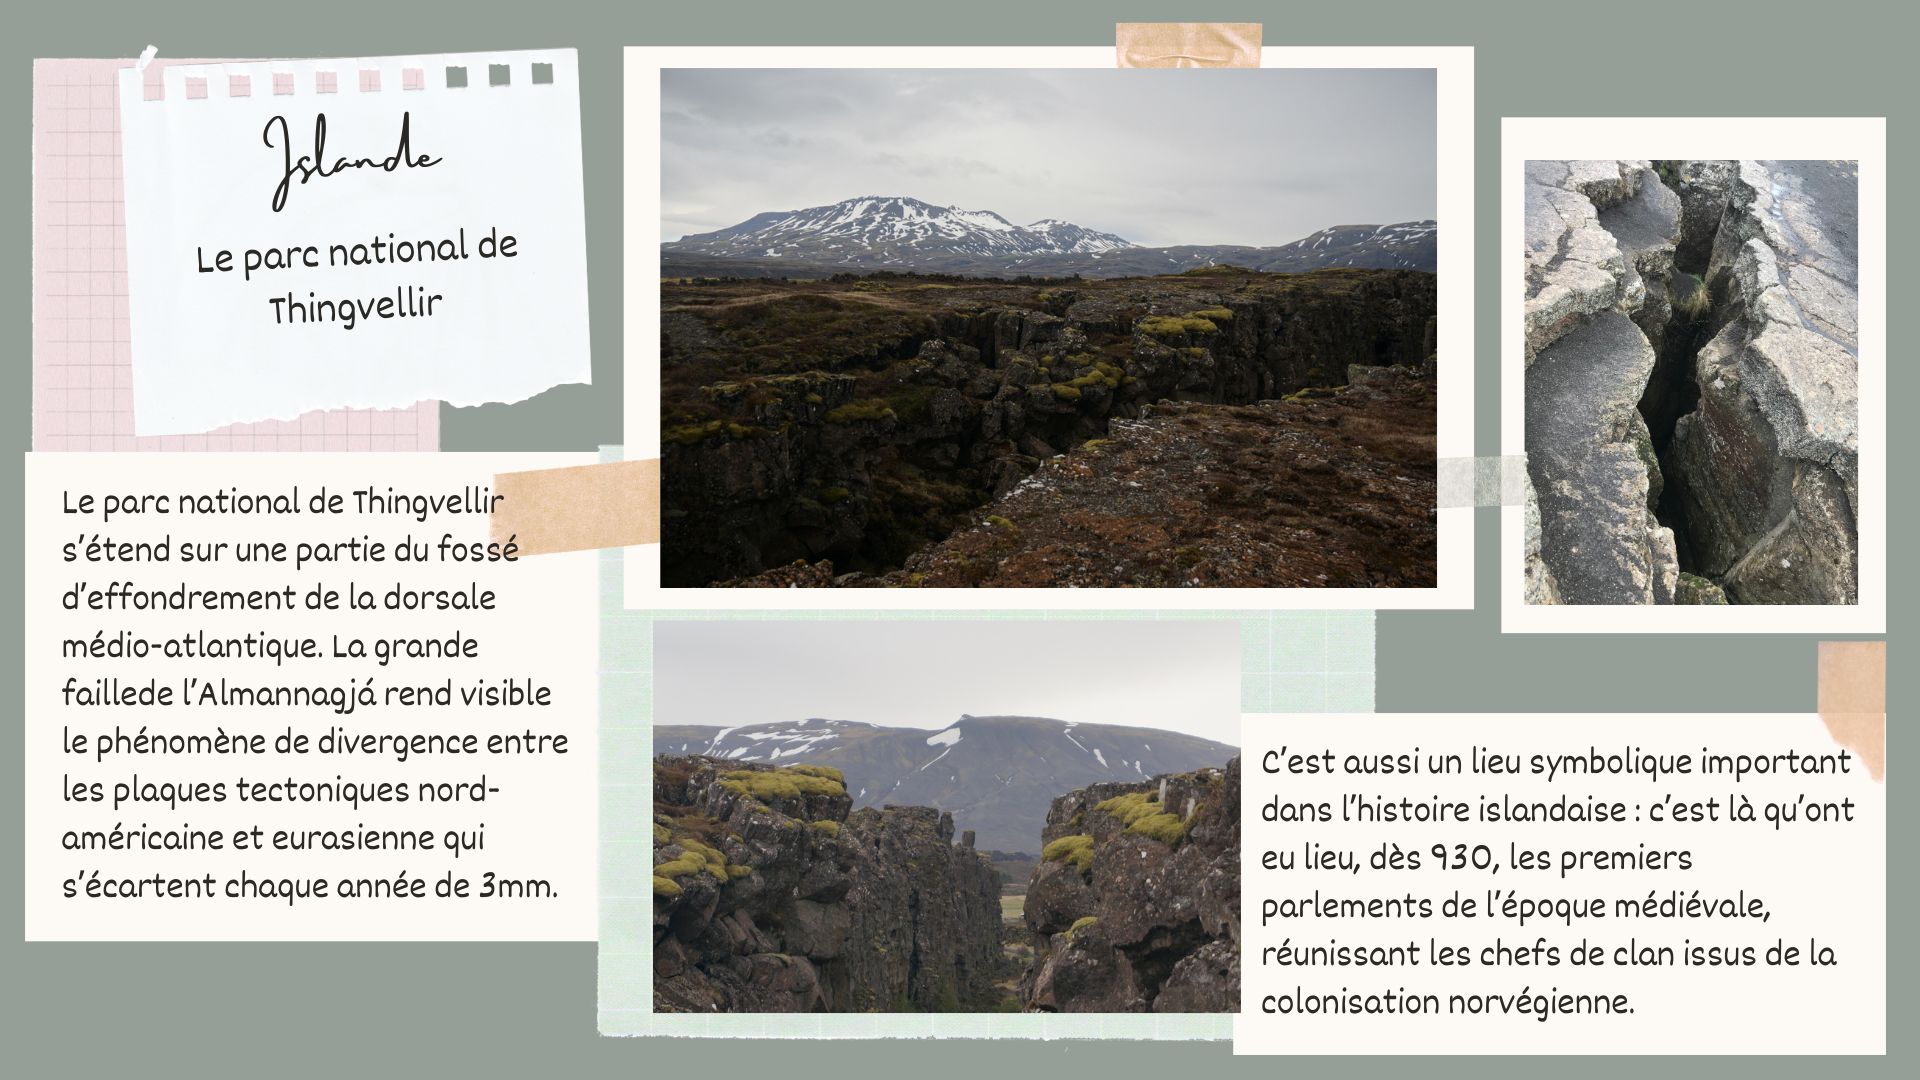 DAAC Islande - la faille du parc Thingvellir